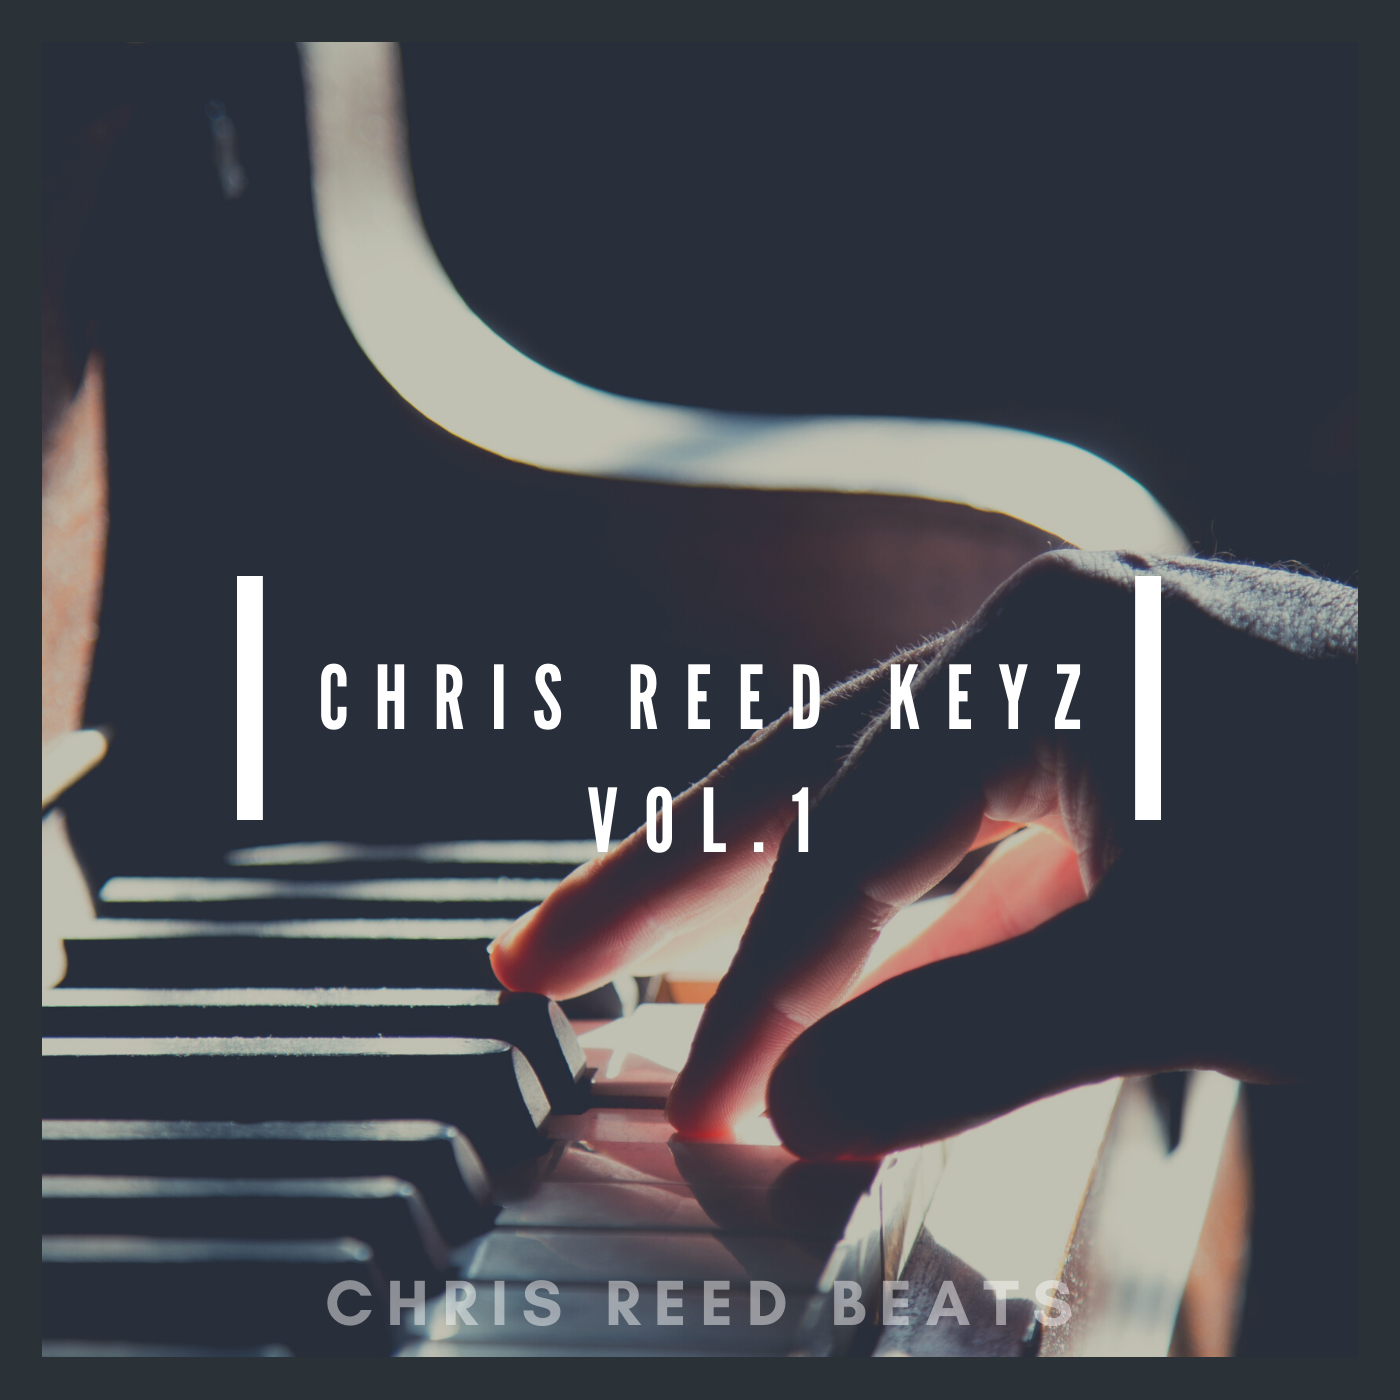 Chris Reed Keyz Vol.1